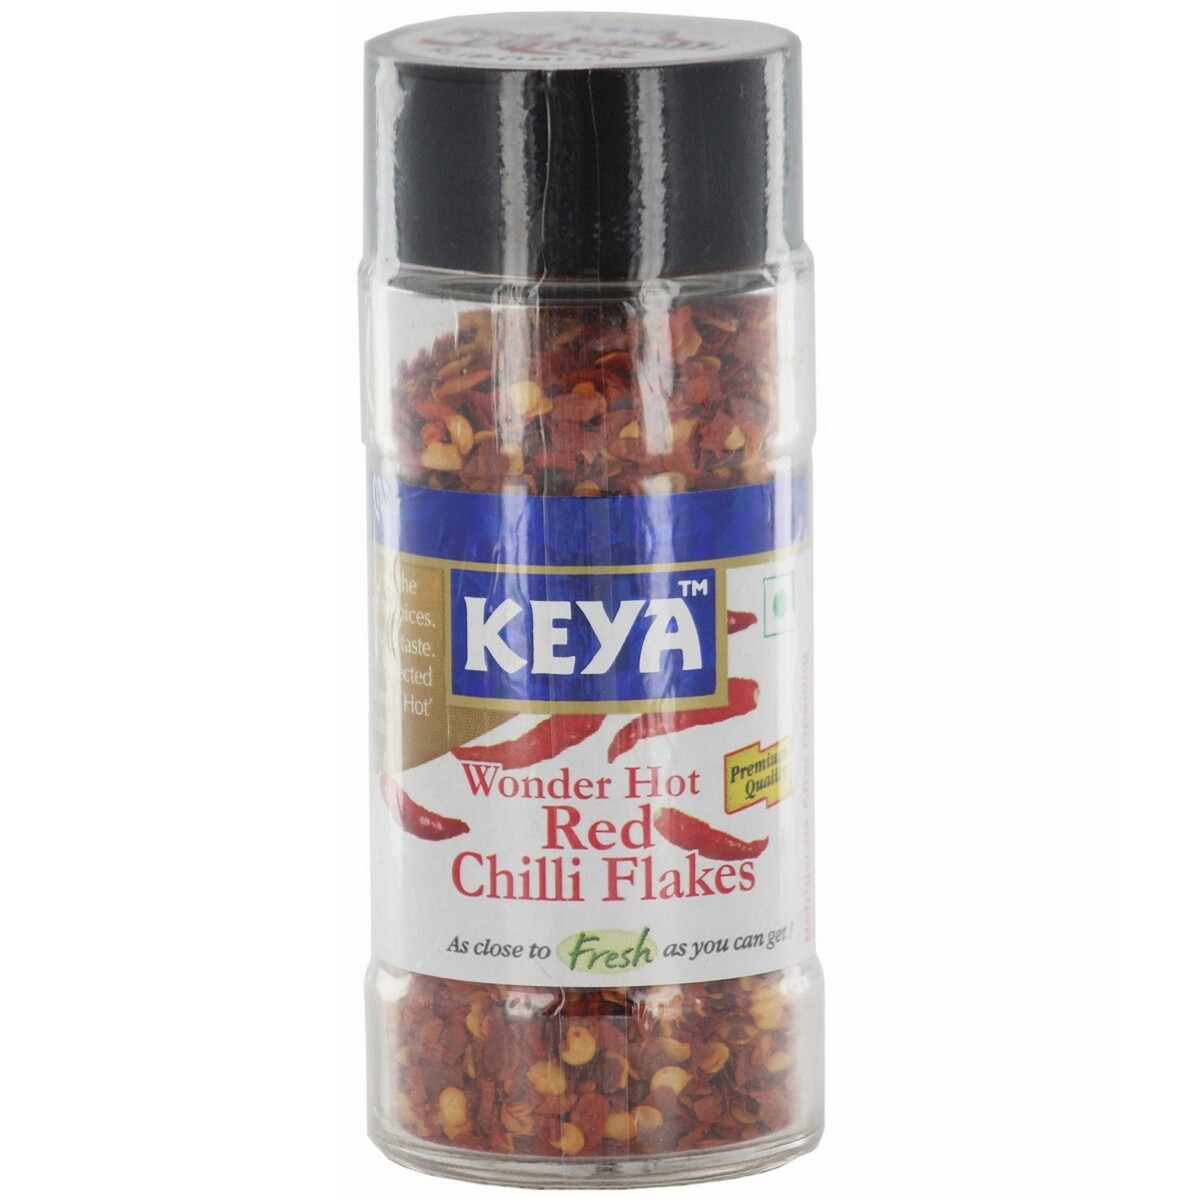 Keya Chilli flakes - 40g